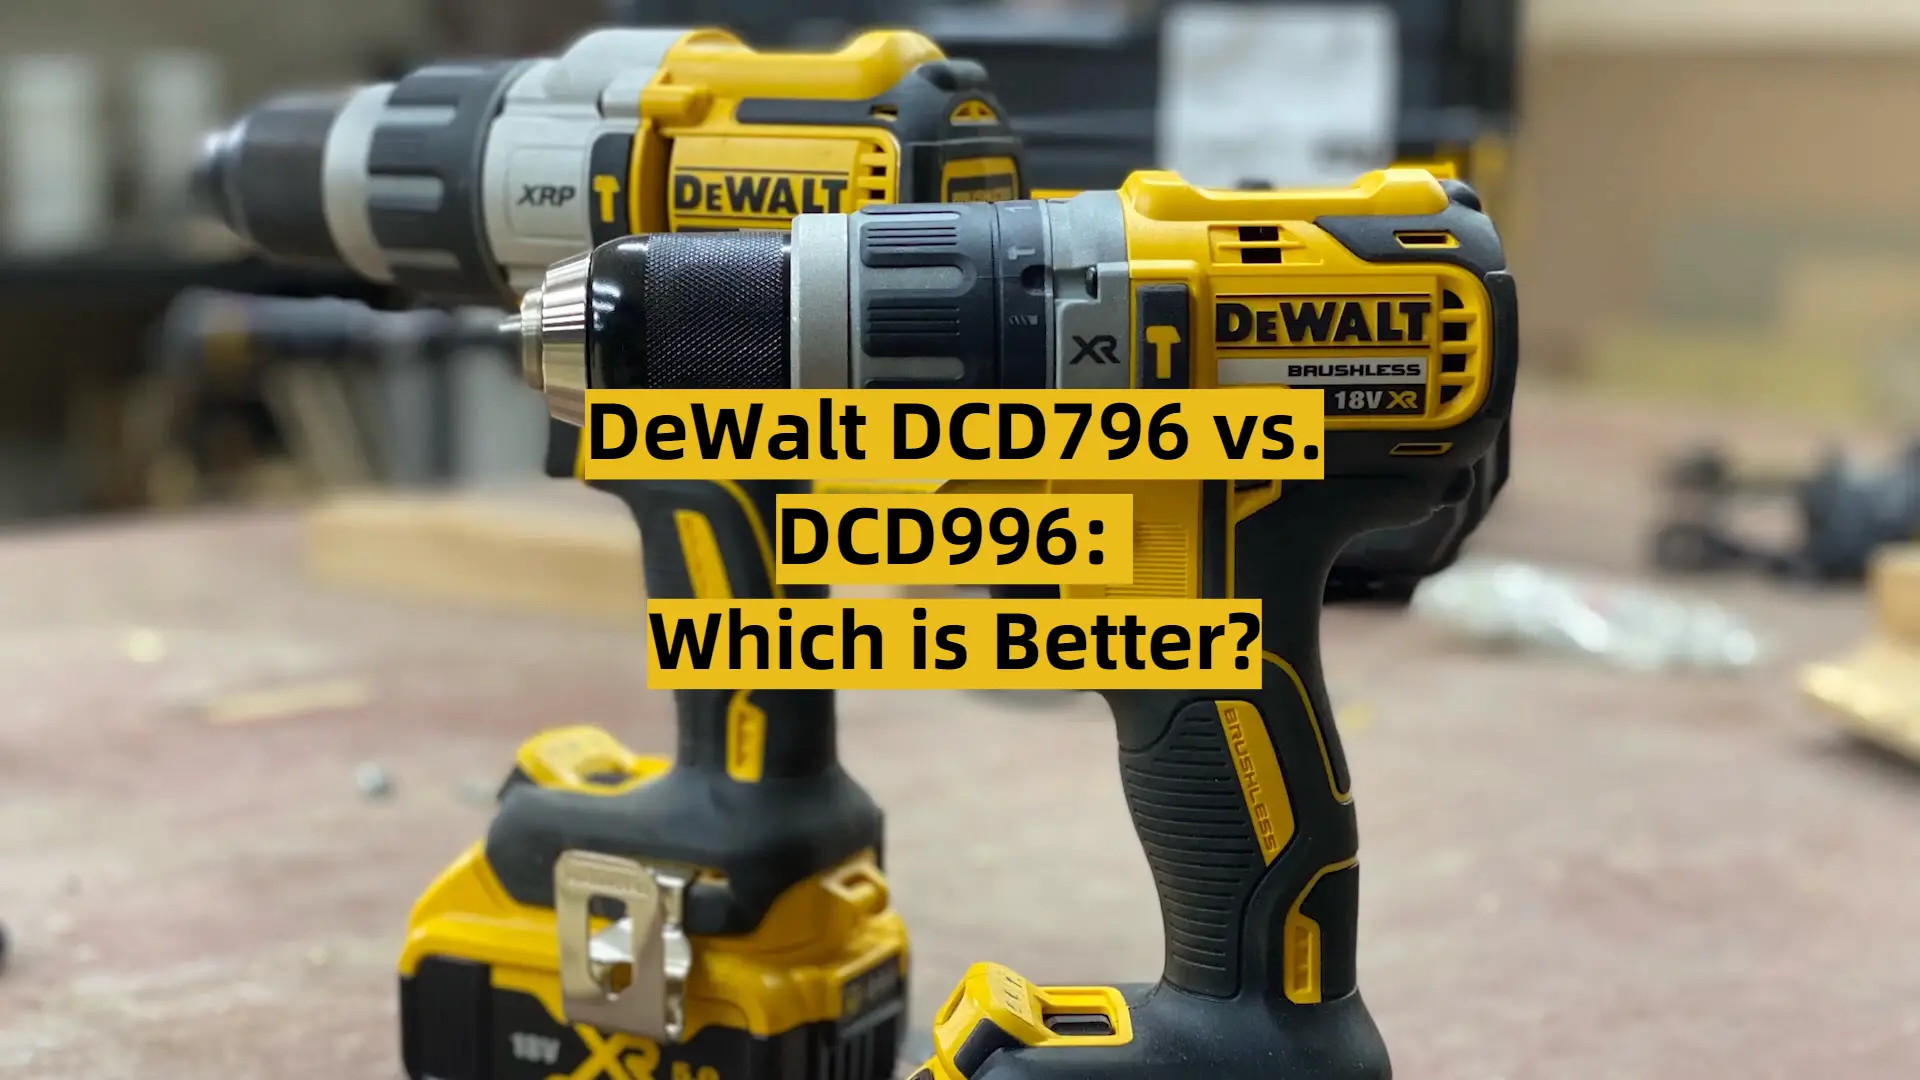 Humedad Votación suelo DeWalt DCD796 vs. DCD996: Which is Better? - ToolsProfy